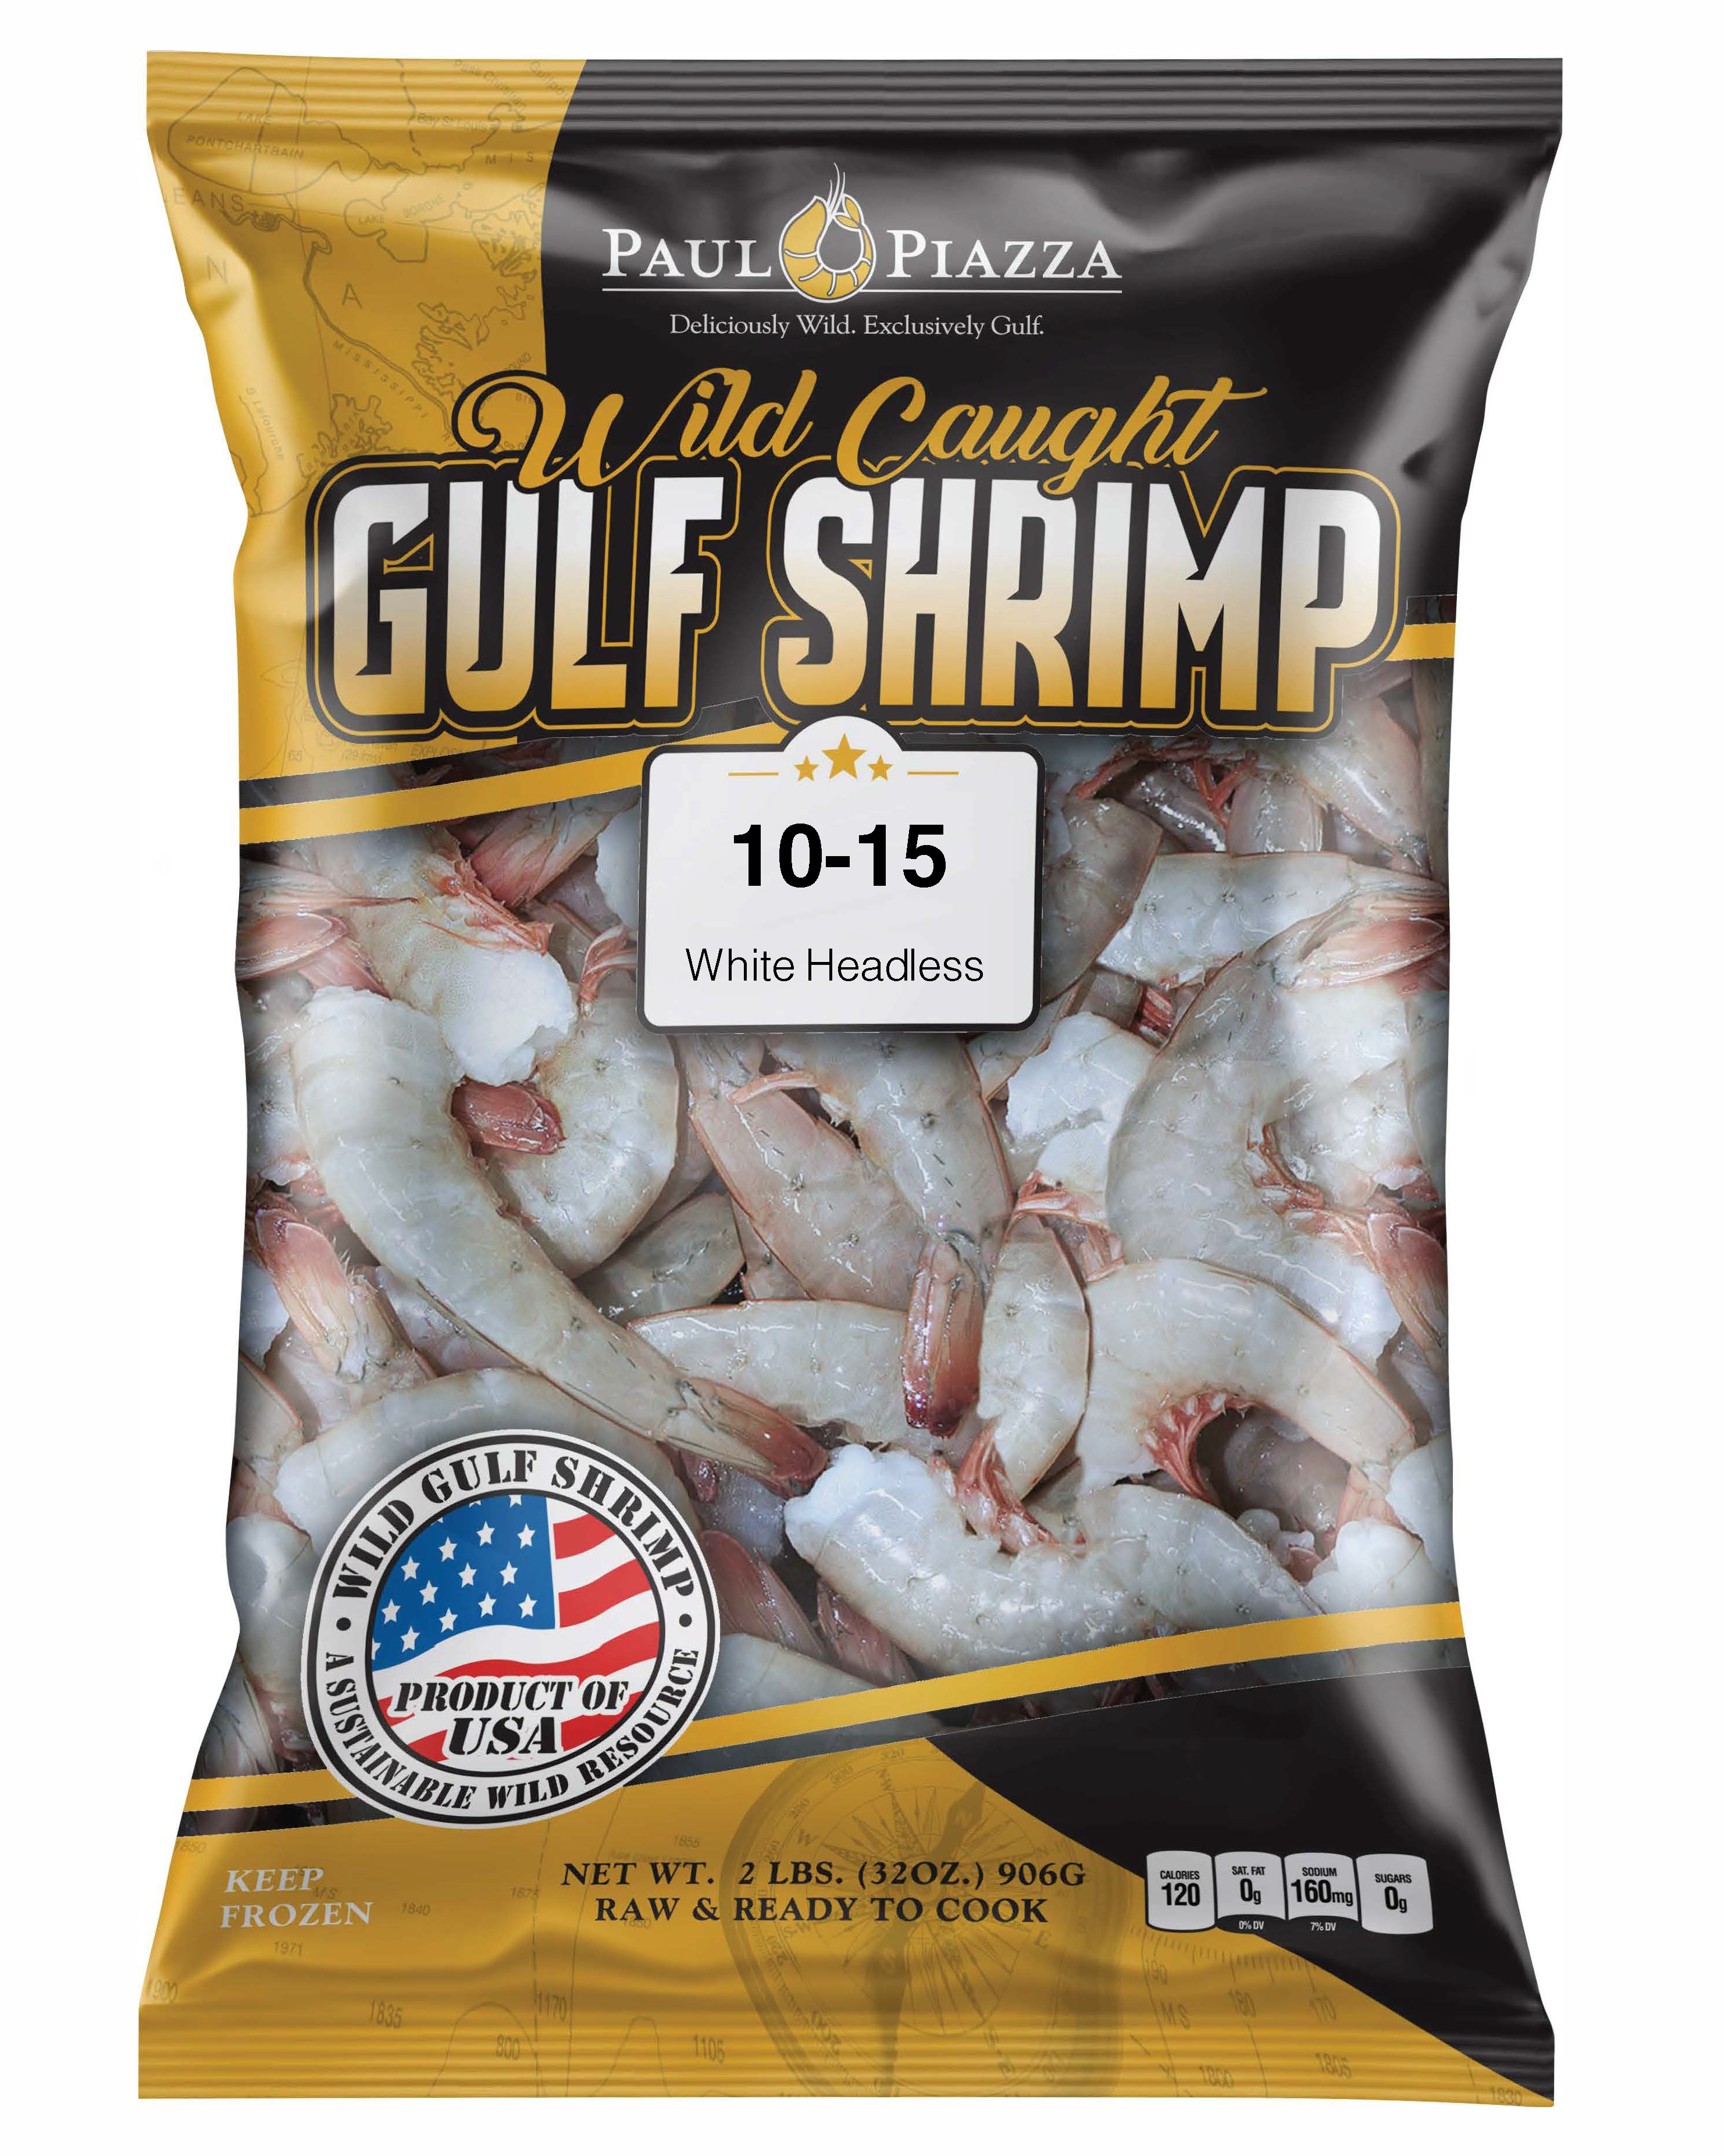 Wild Caught Gulf Shrimp Packaging